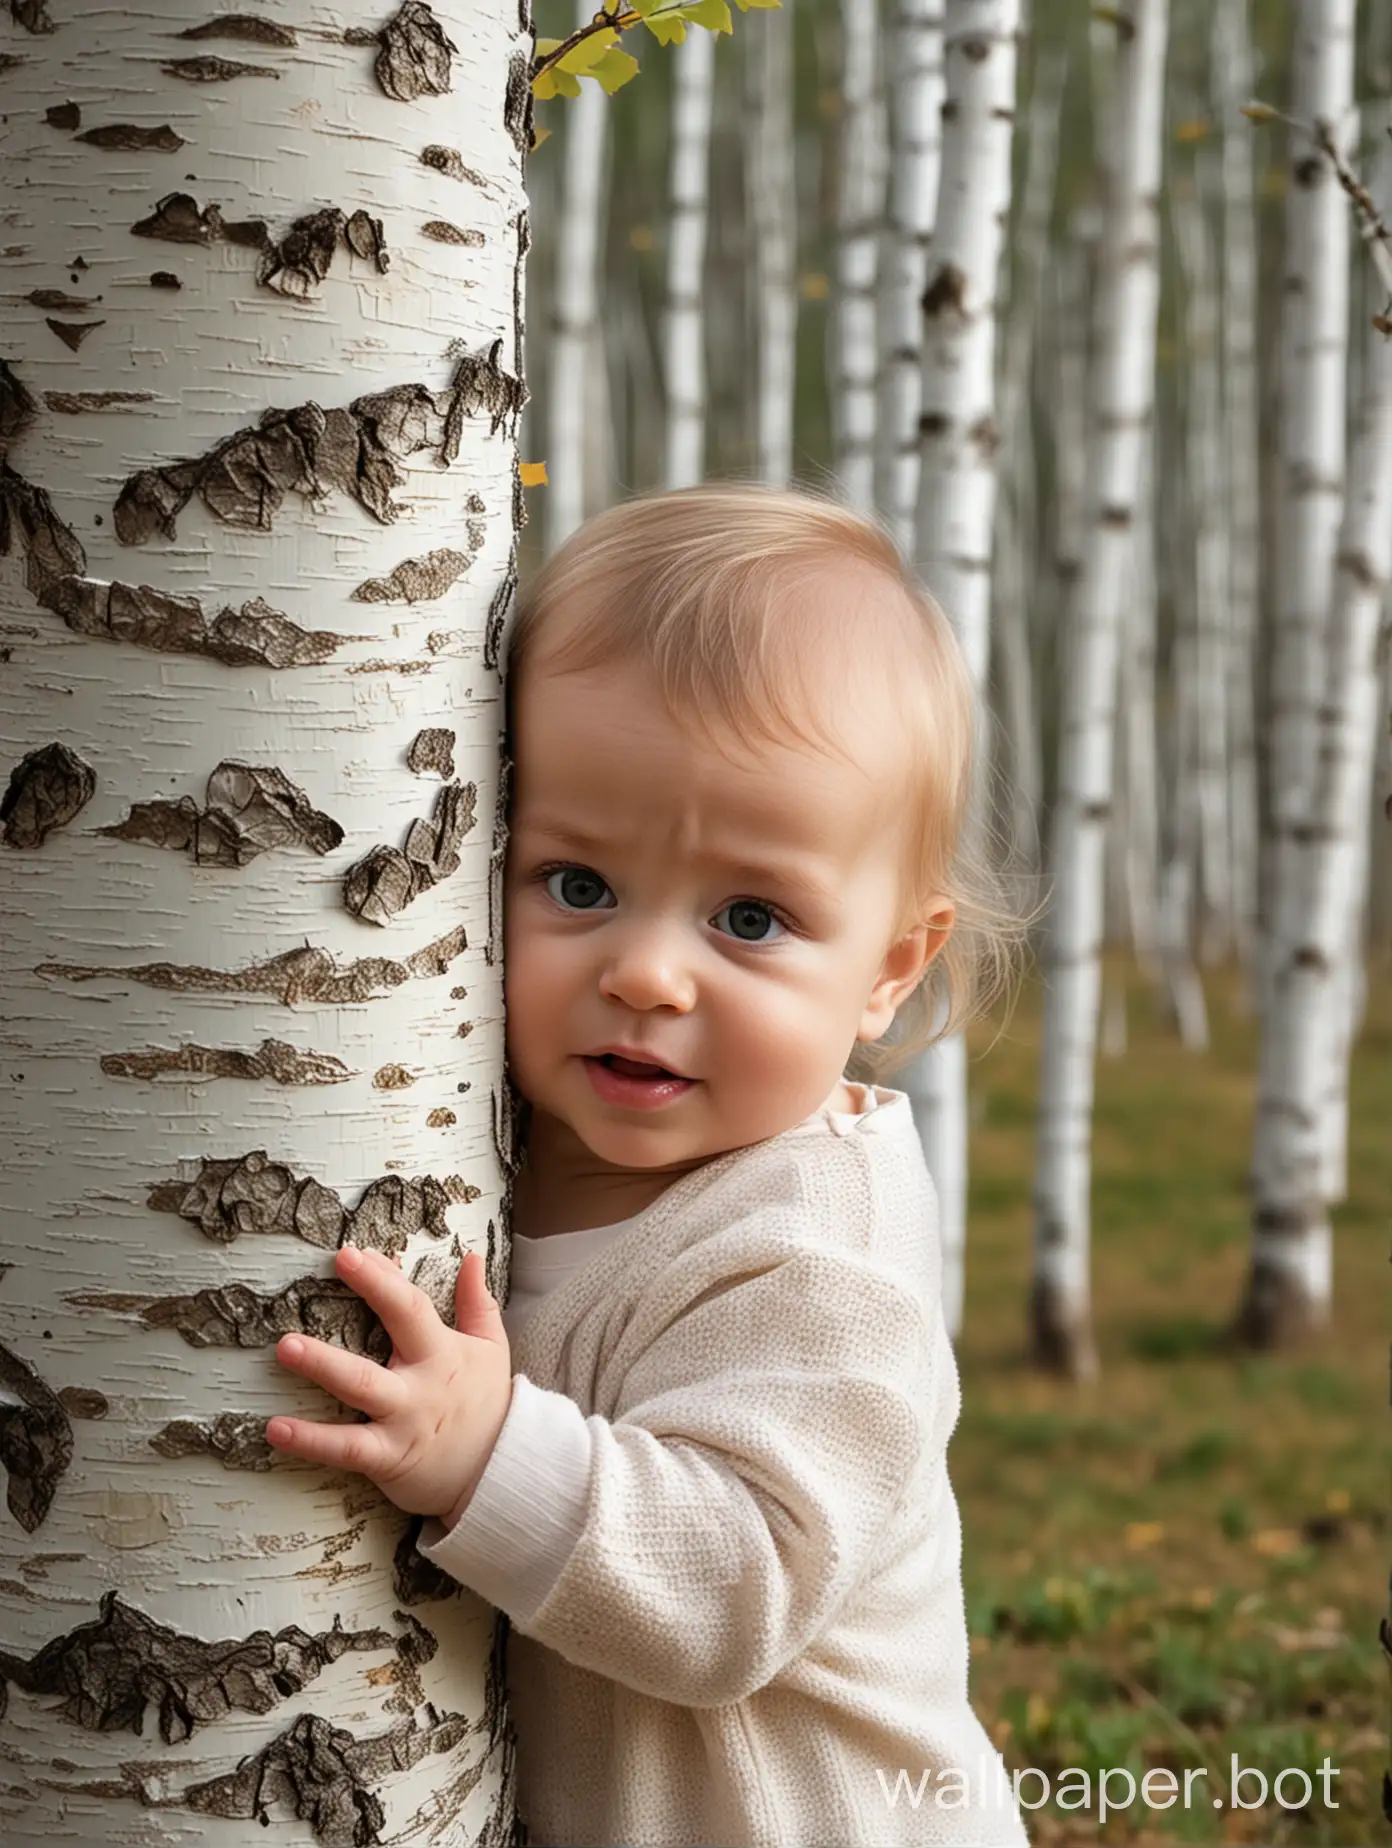 The baby hugs the birch tree